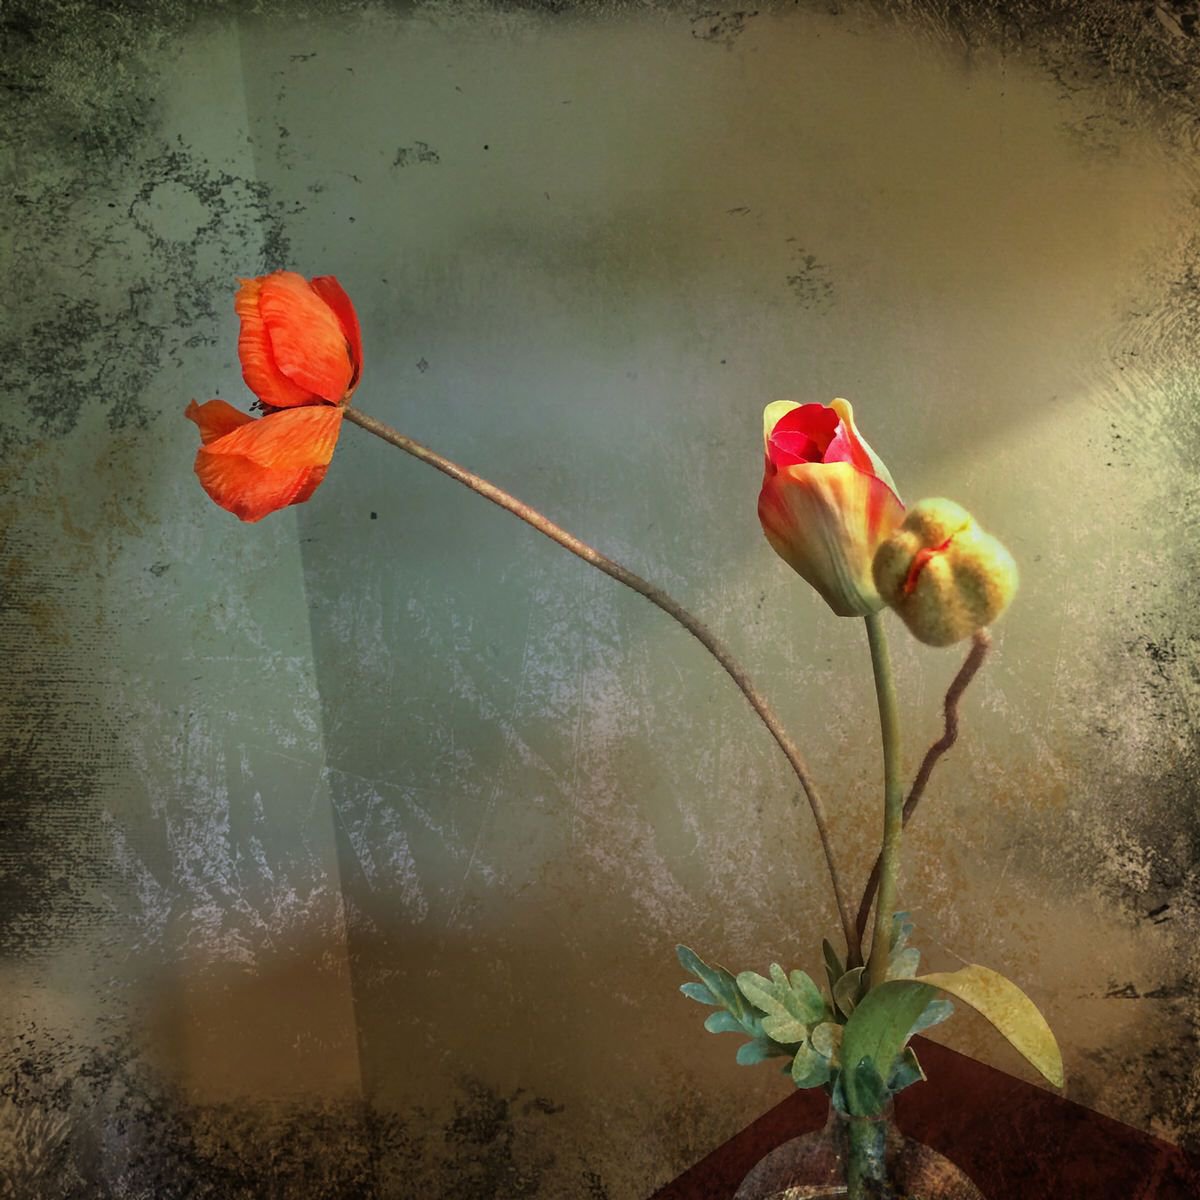 Floral Plastanium by Greg Dyro